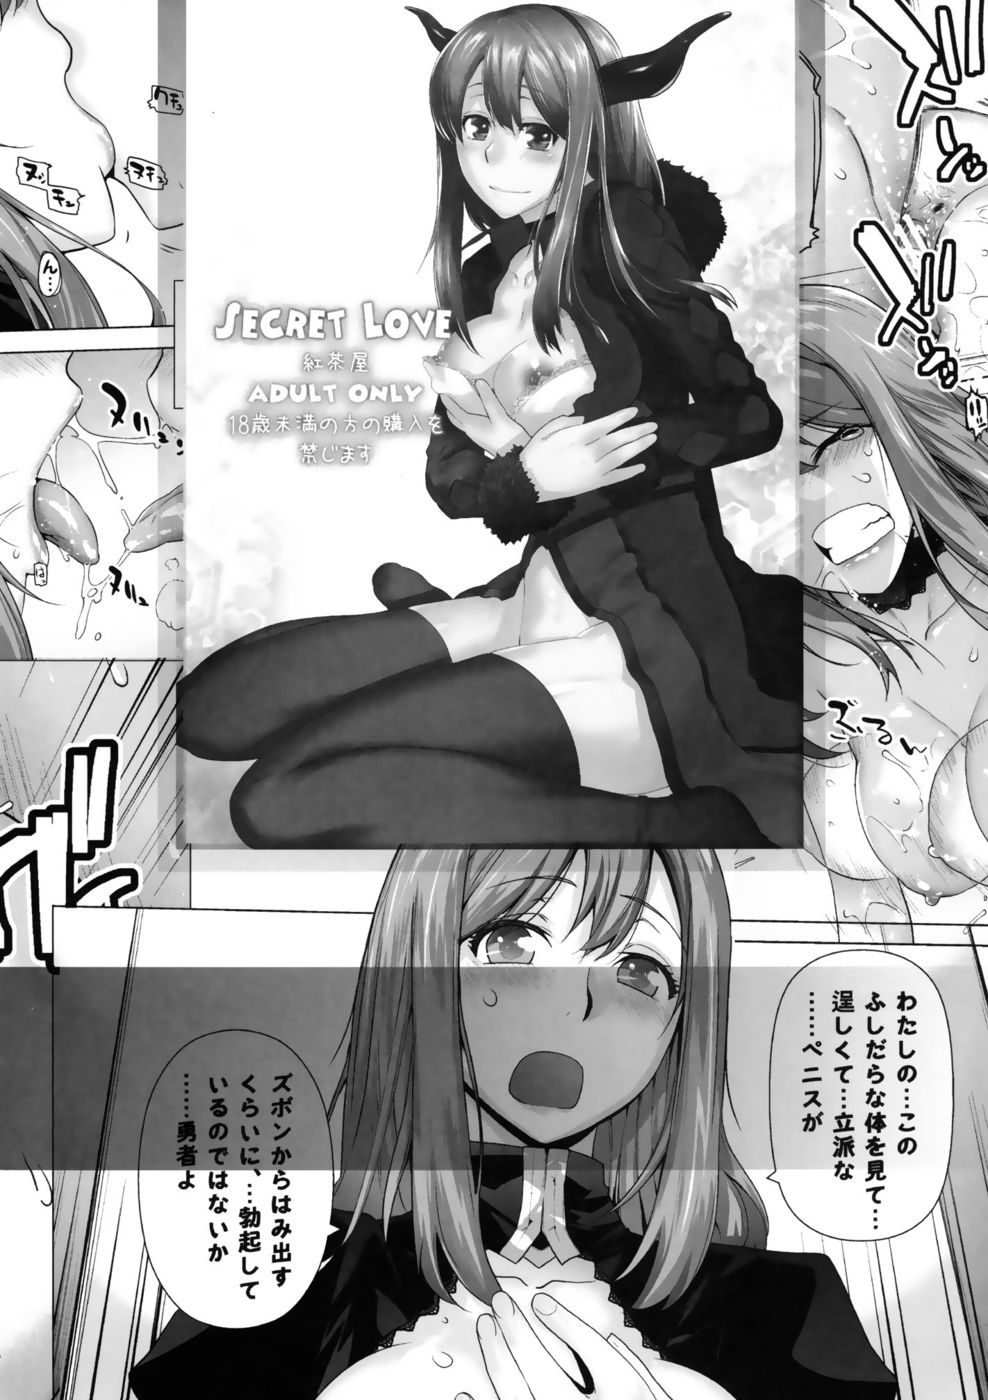 Hentai Manga Comic-Secret Love 2-Read-27